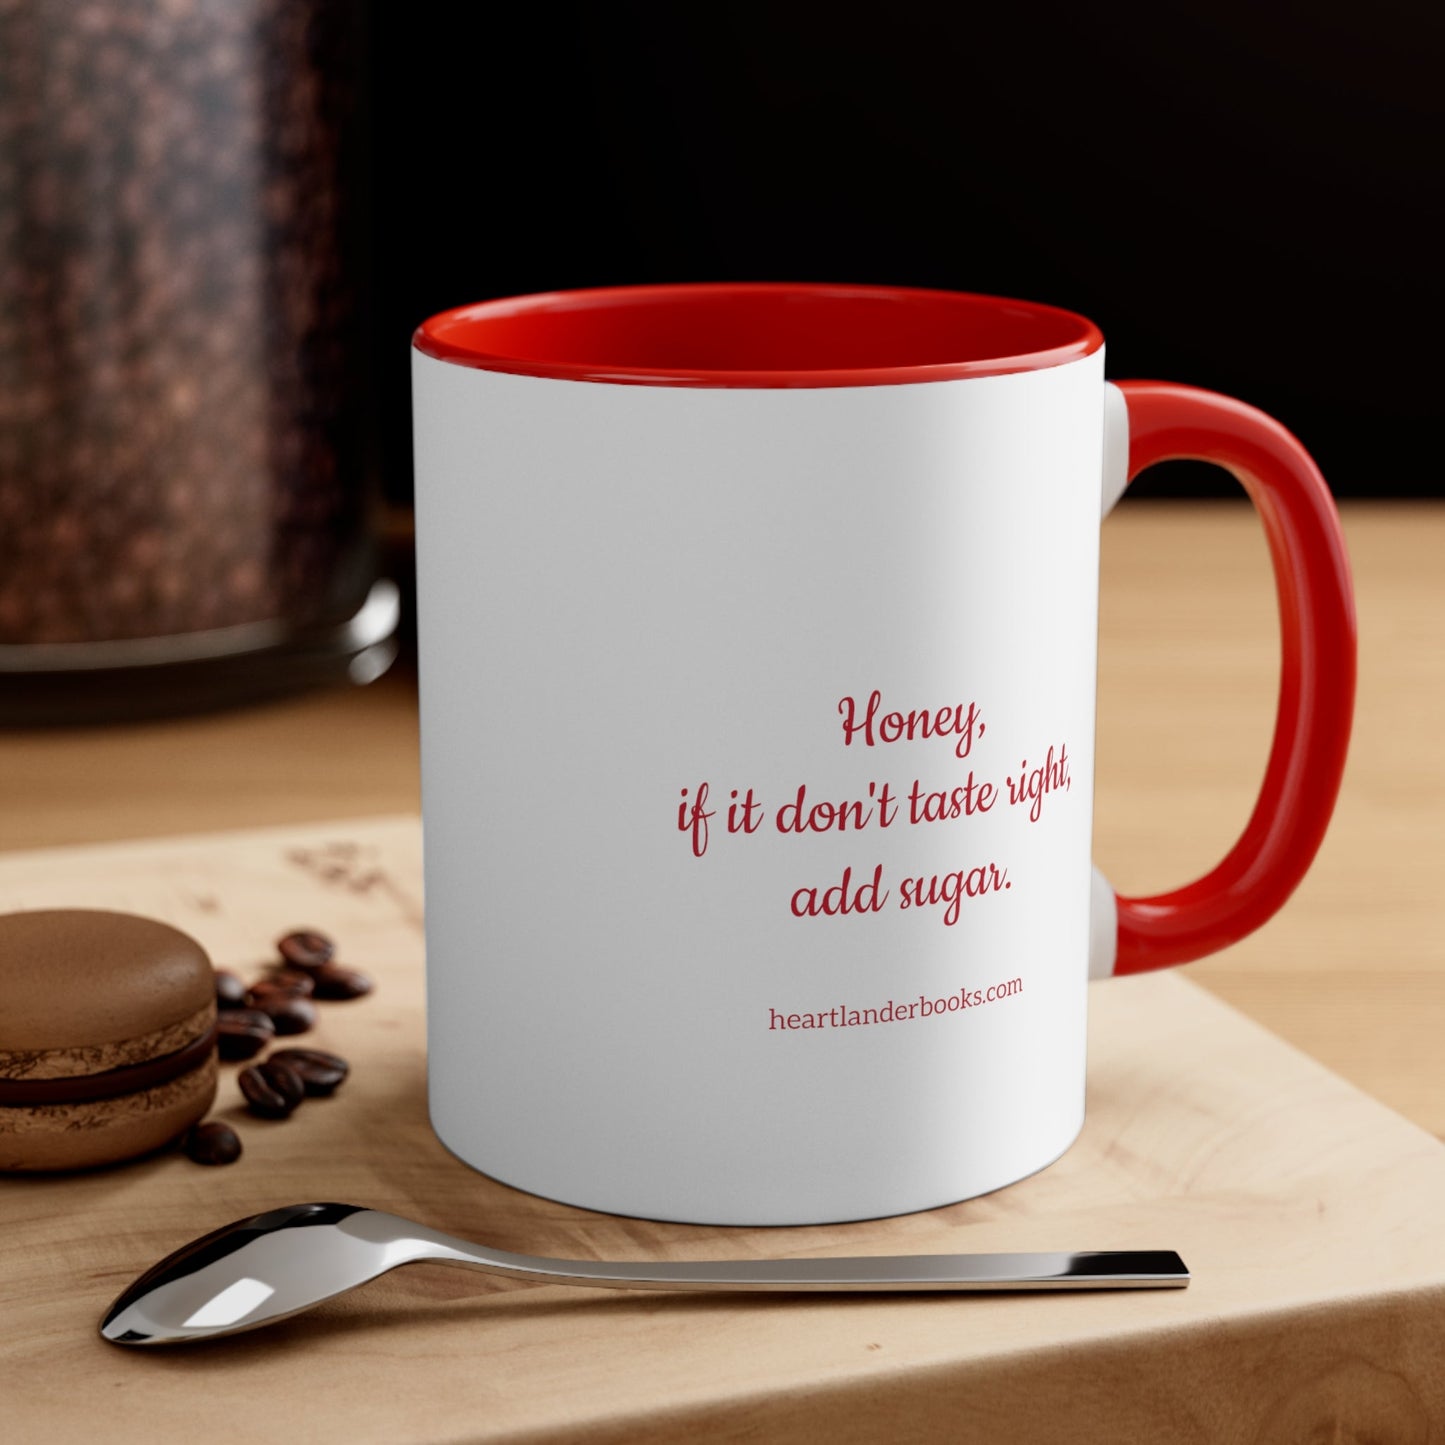 Mug - Roadside Red/White Coffee Mug, 11oz